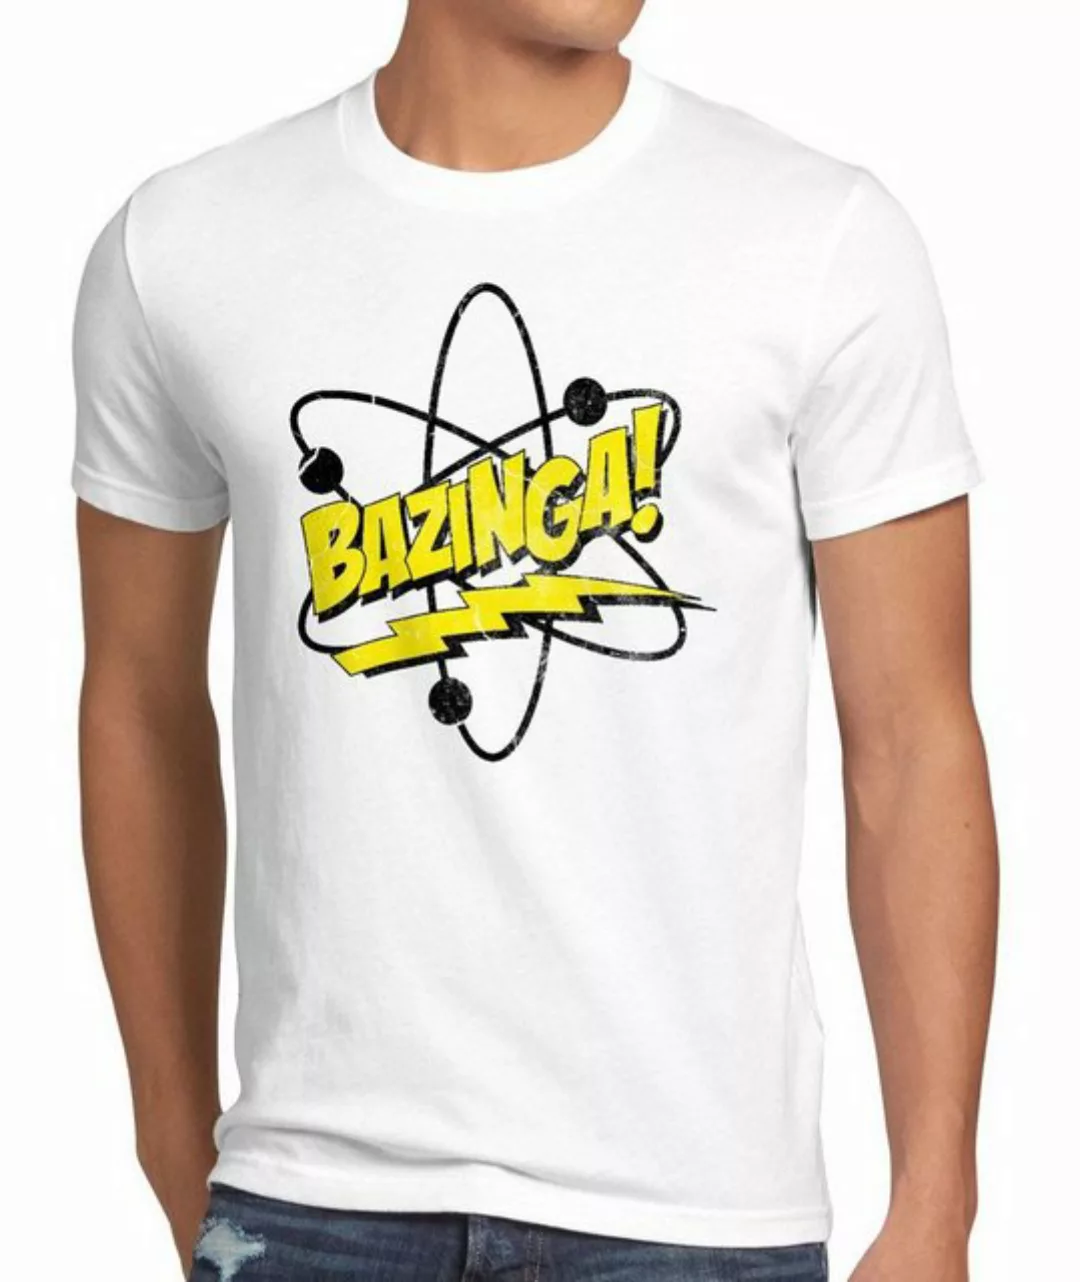 style3 Print-Shirt Herren T-Shirt Bazinga Sheldon big bang fan atom cooper günstig online kaufen